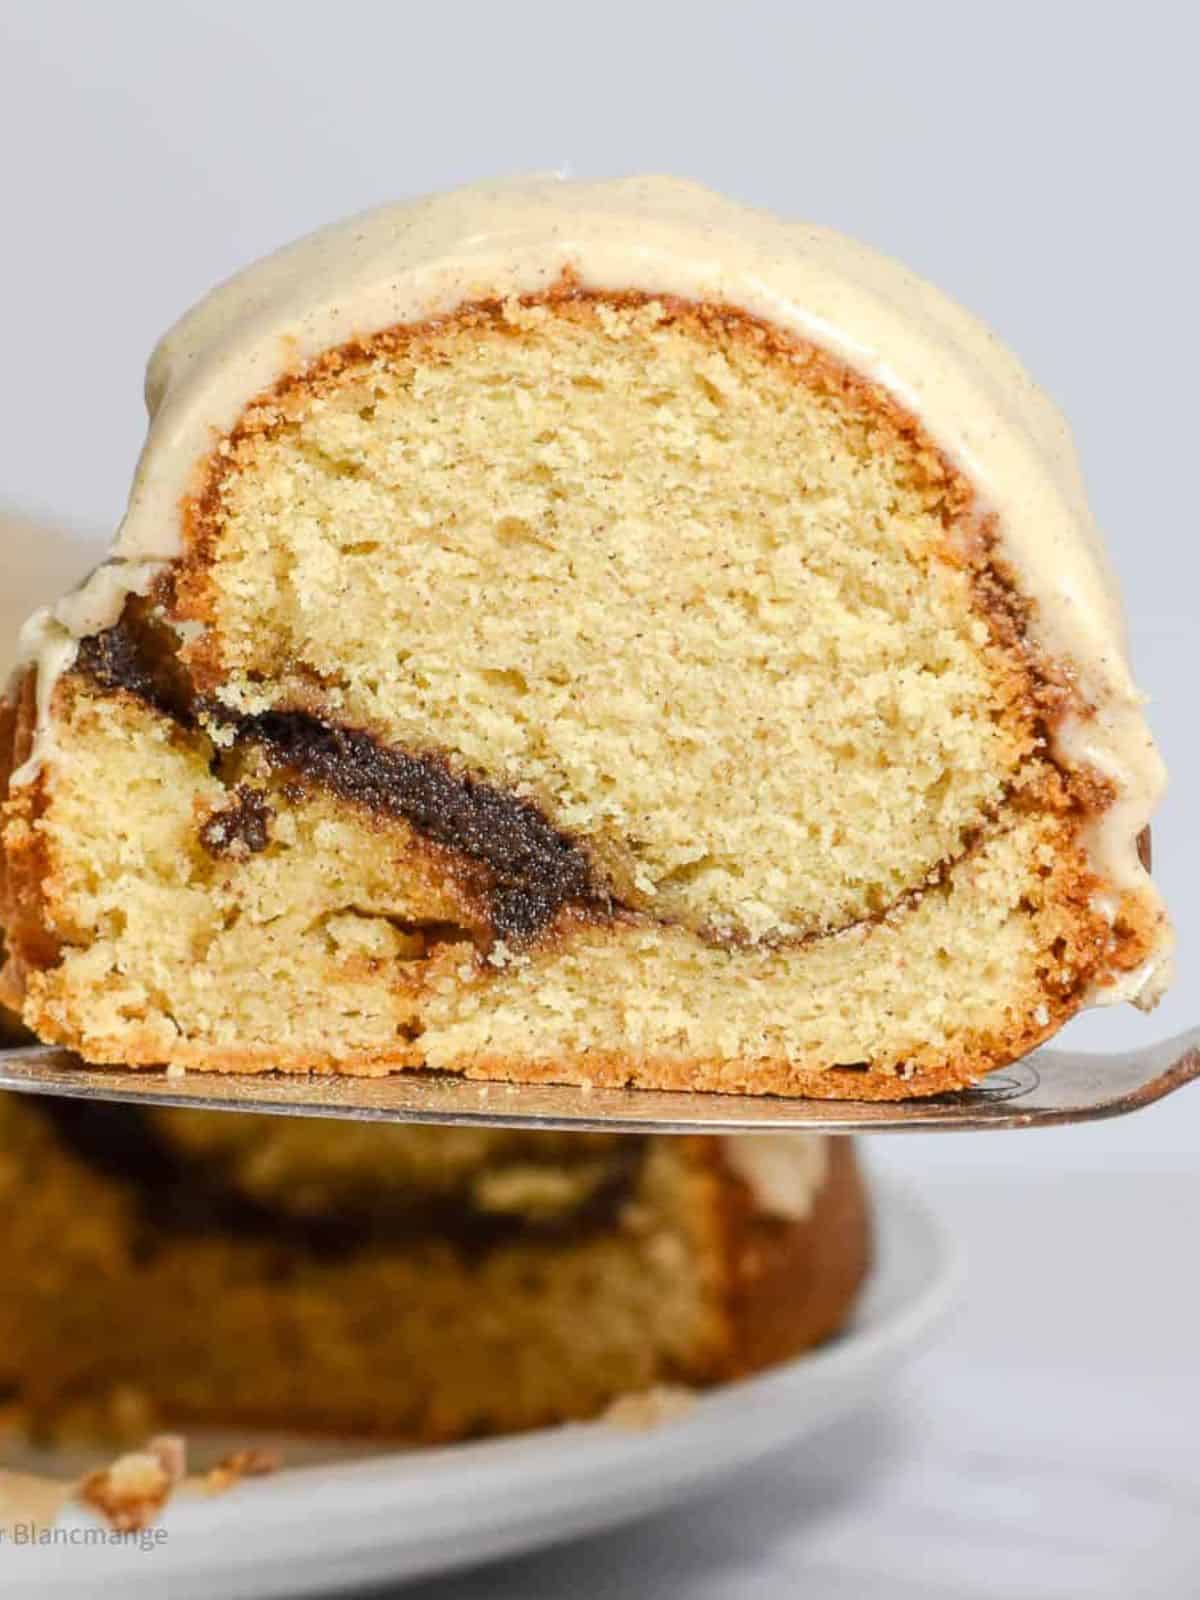 golden-brown buttermilk cinnamon bundt cake.